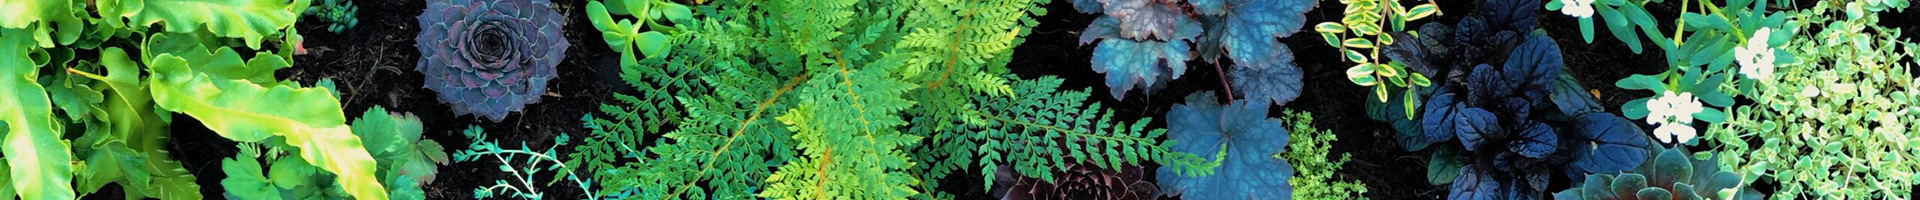 Plants Background Image